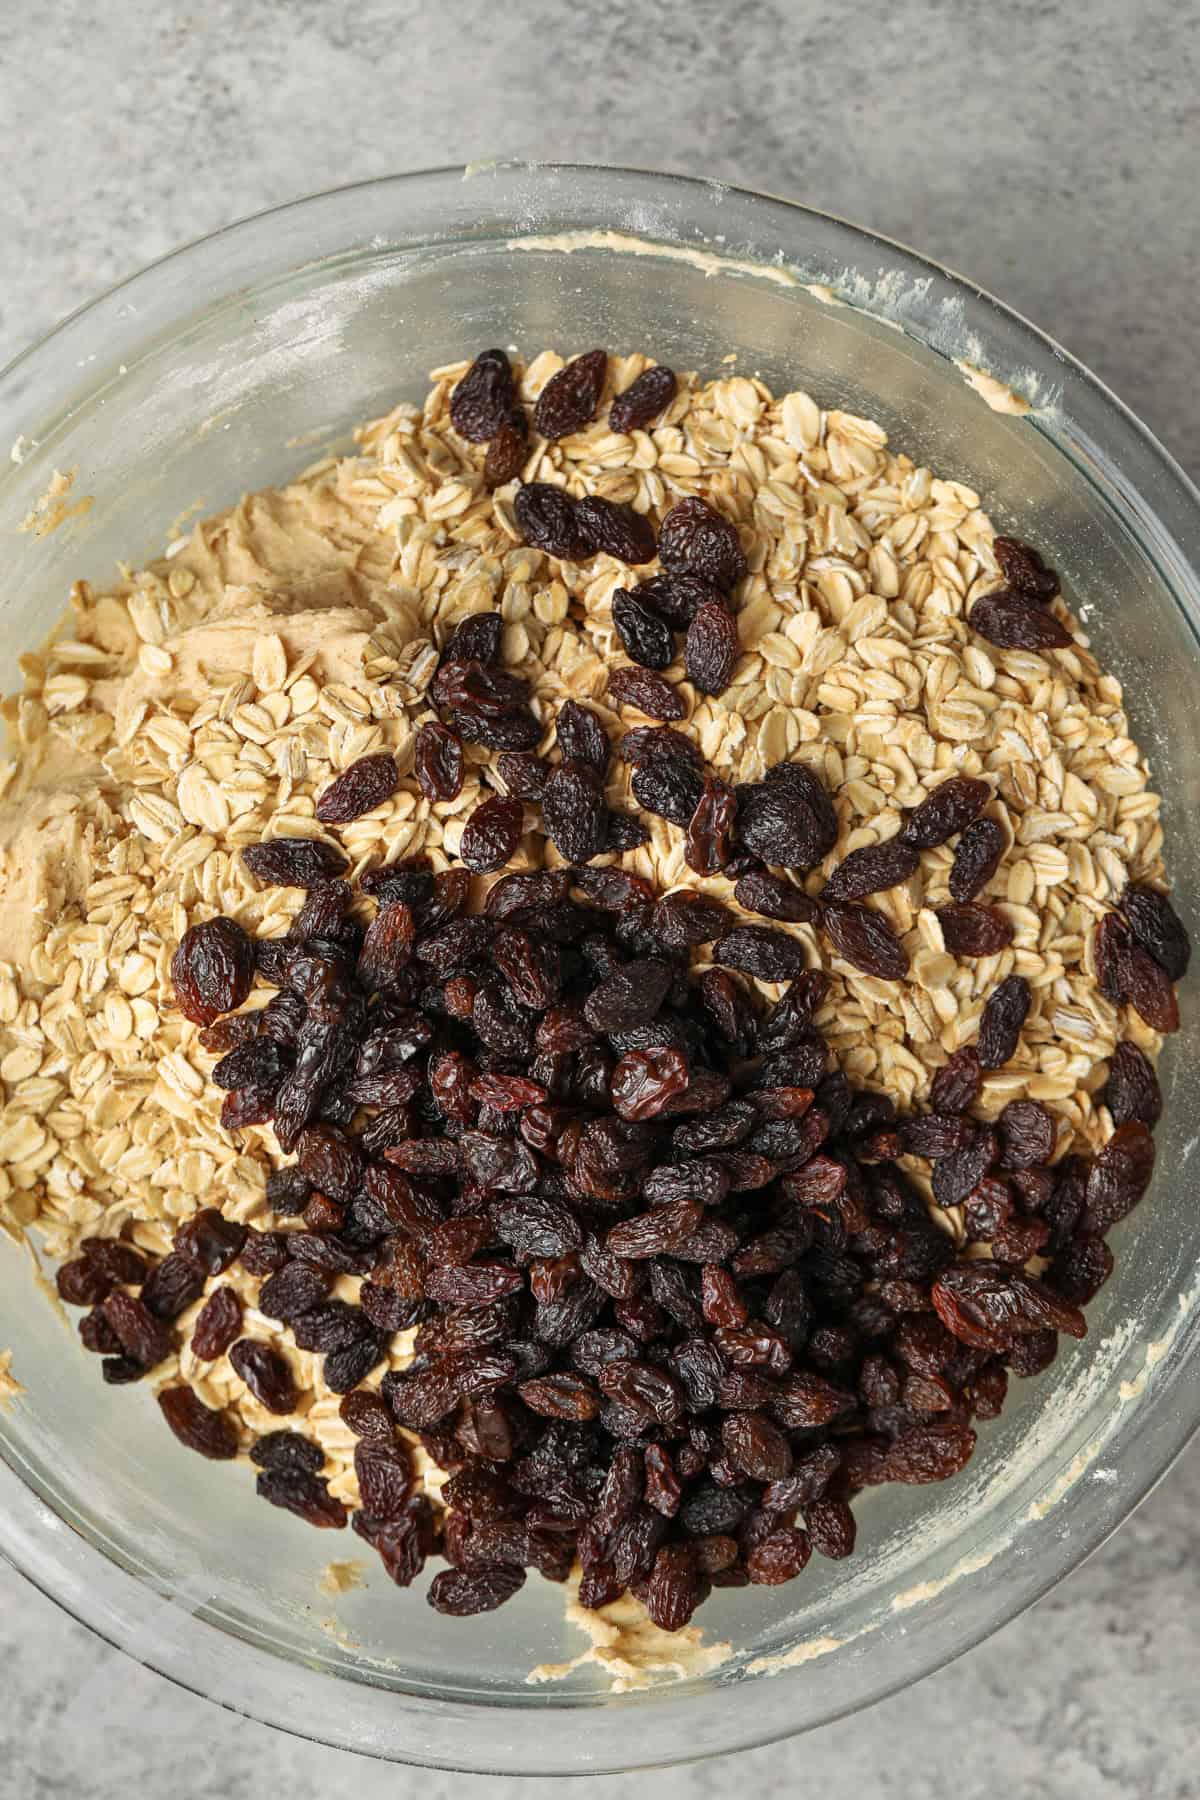 adding raisins to oats to make Oatmeal Raisin Cookies